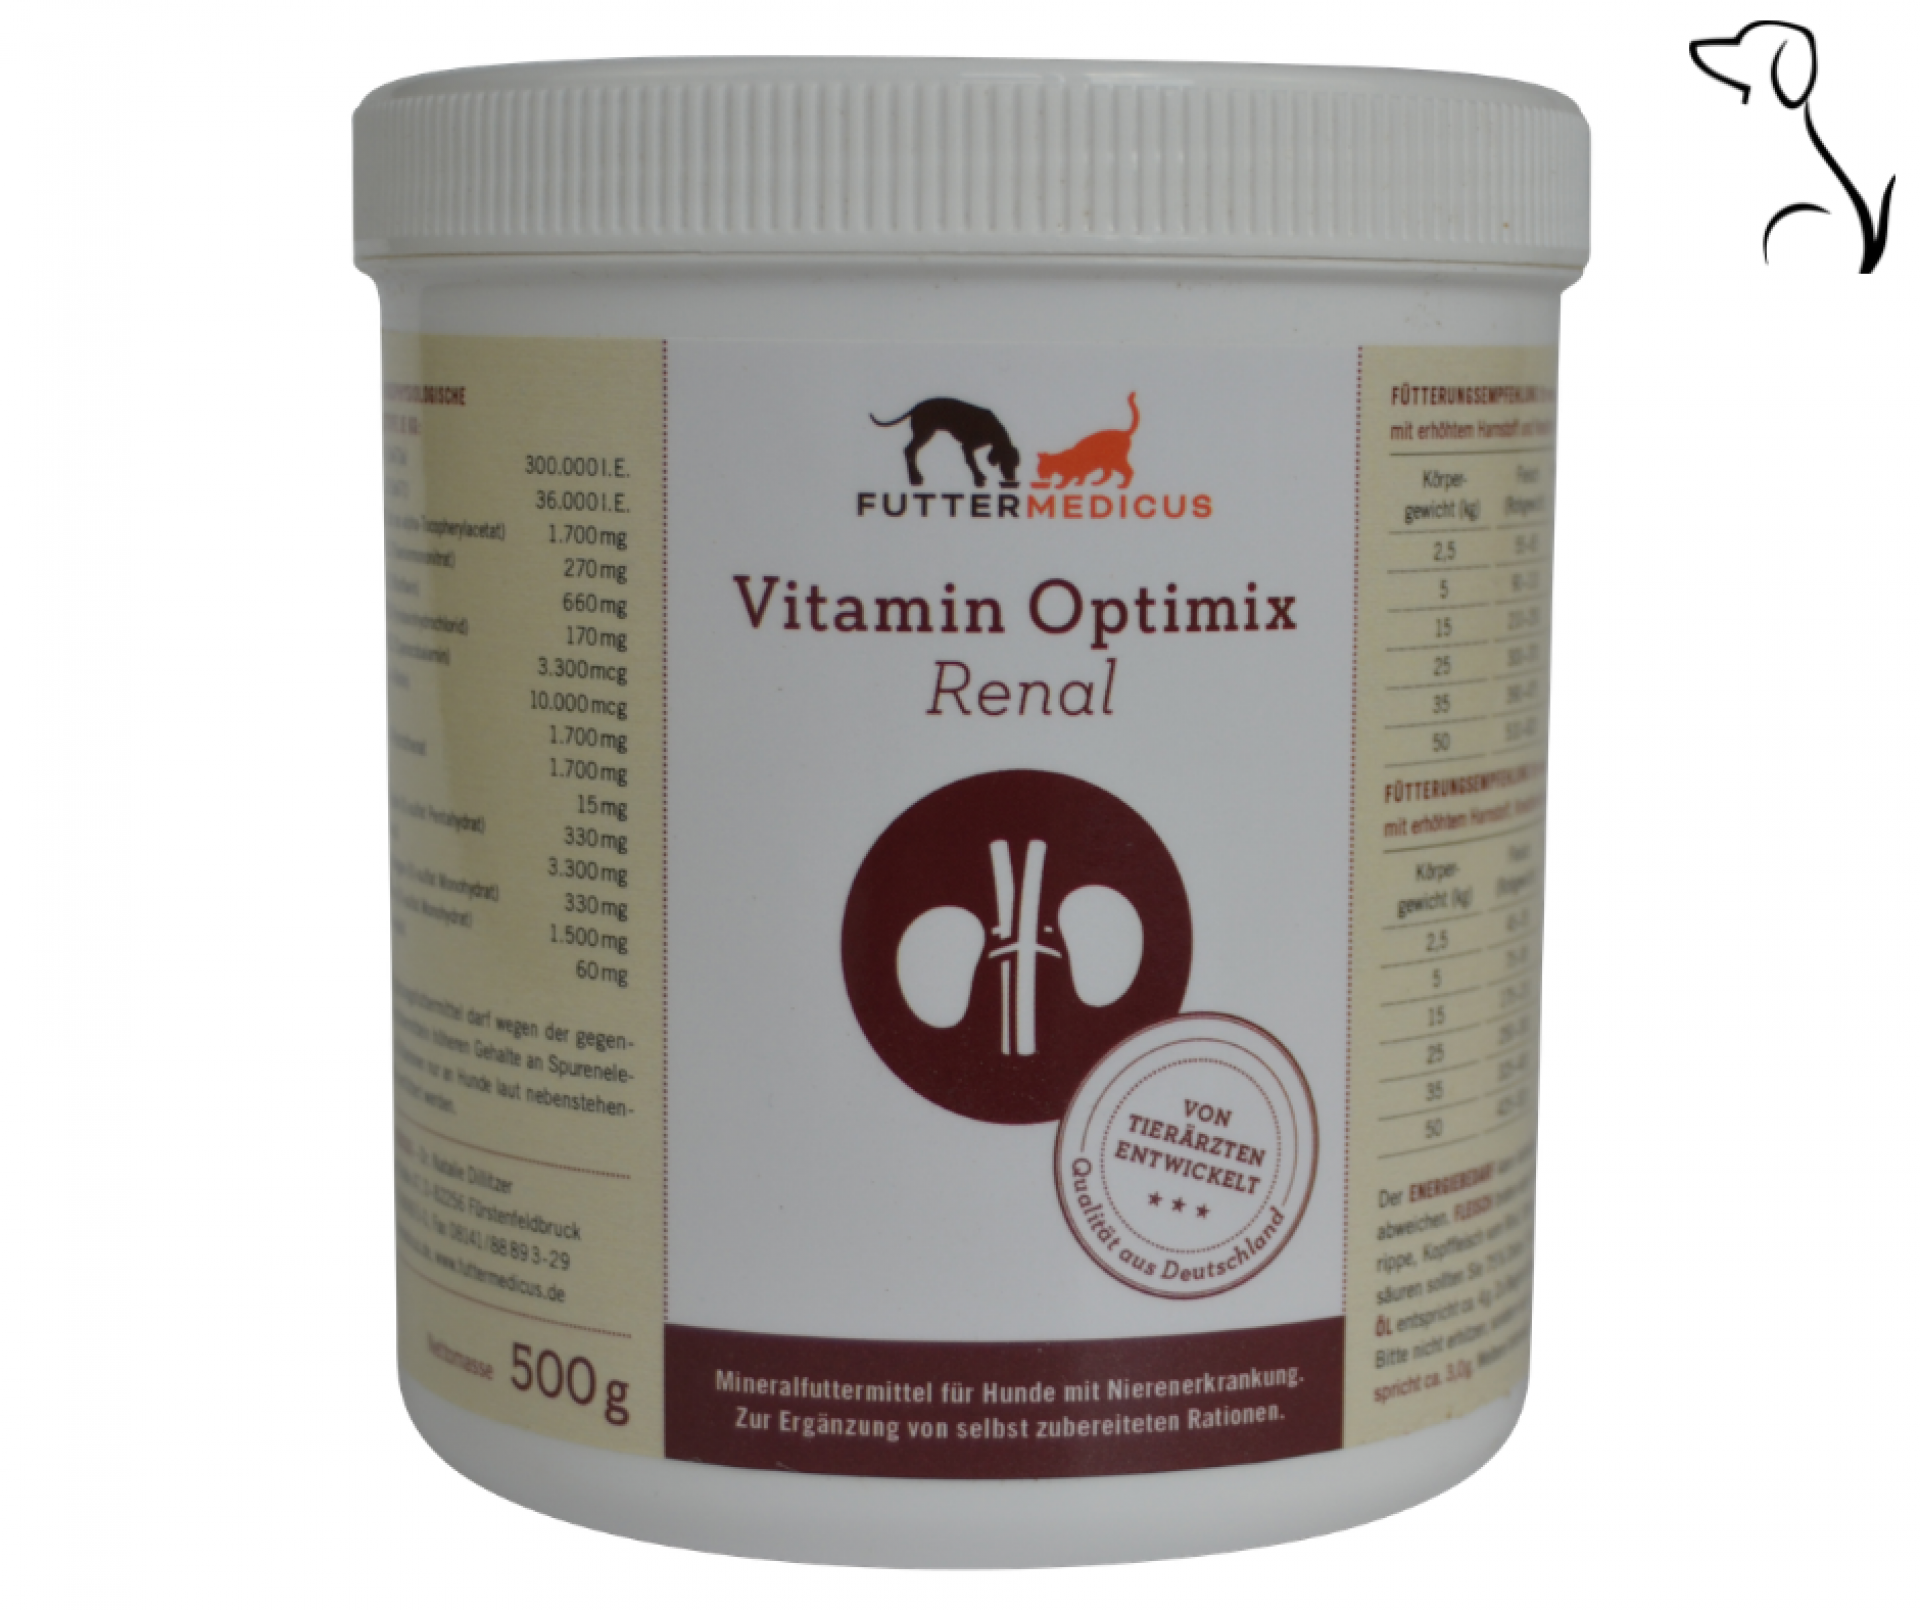 Vitamin Optimix Renal / Futtermedicus für Hunde